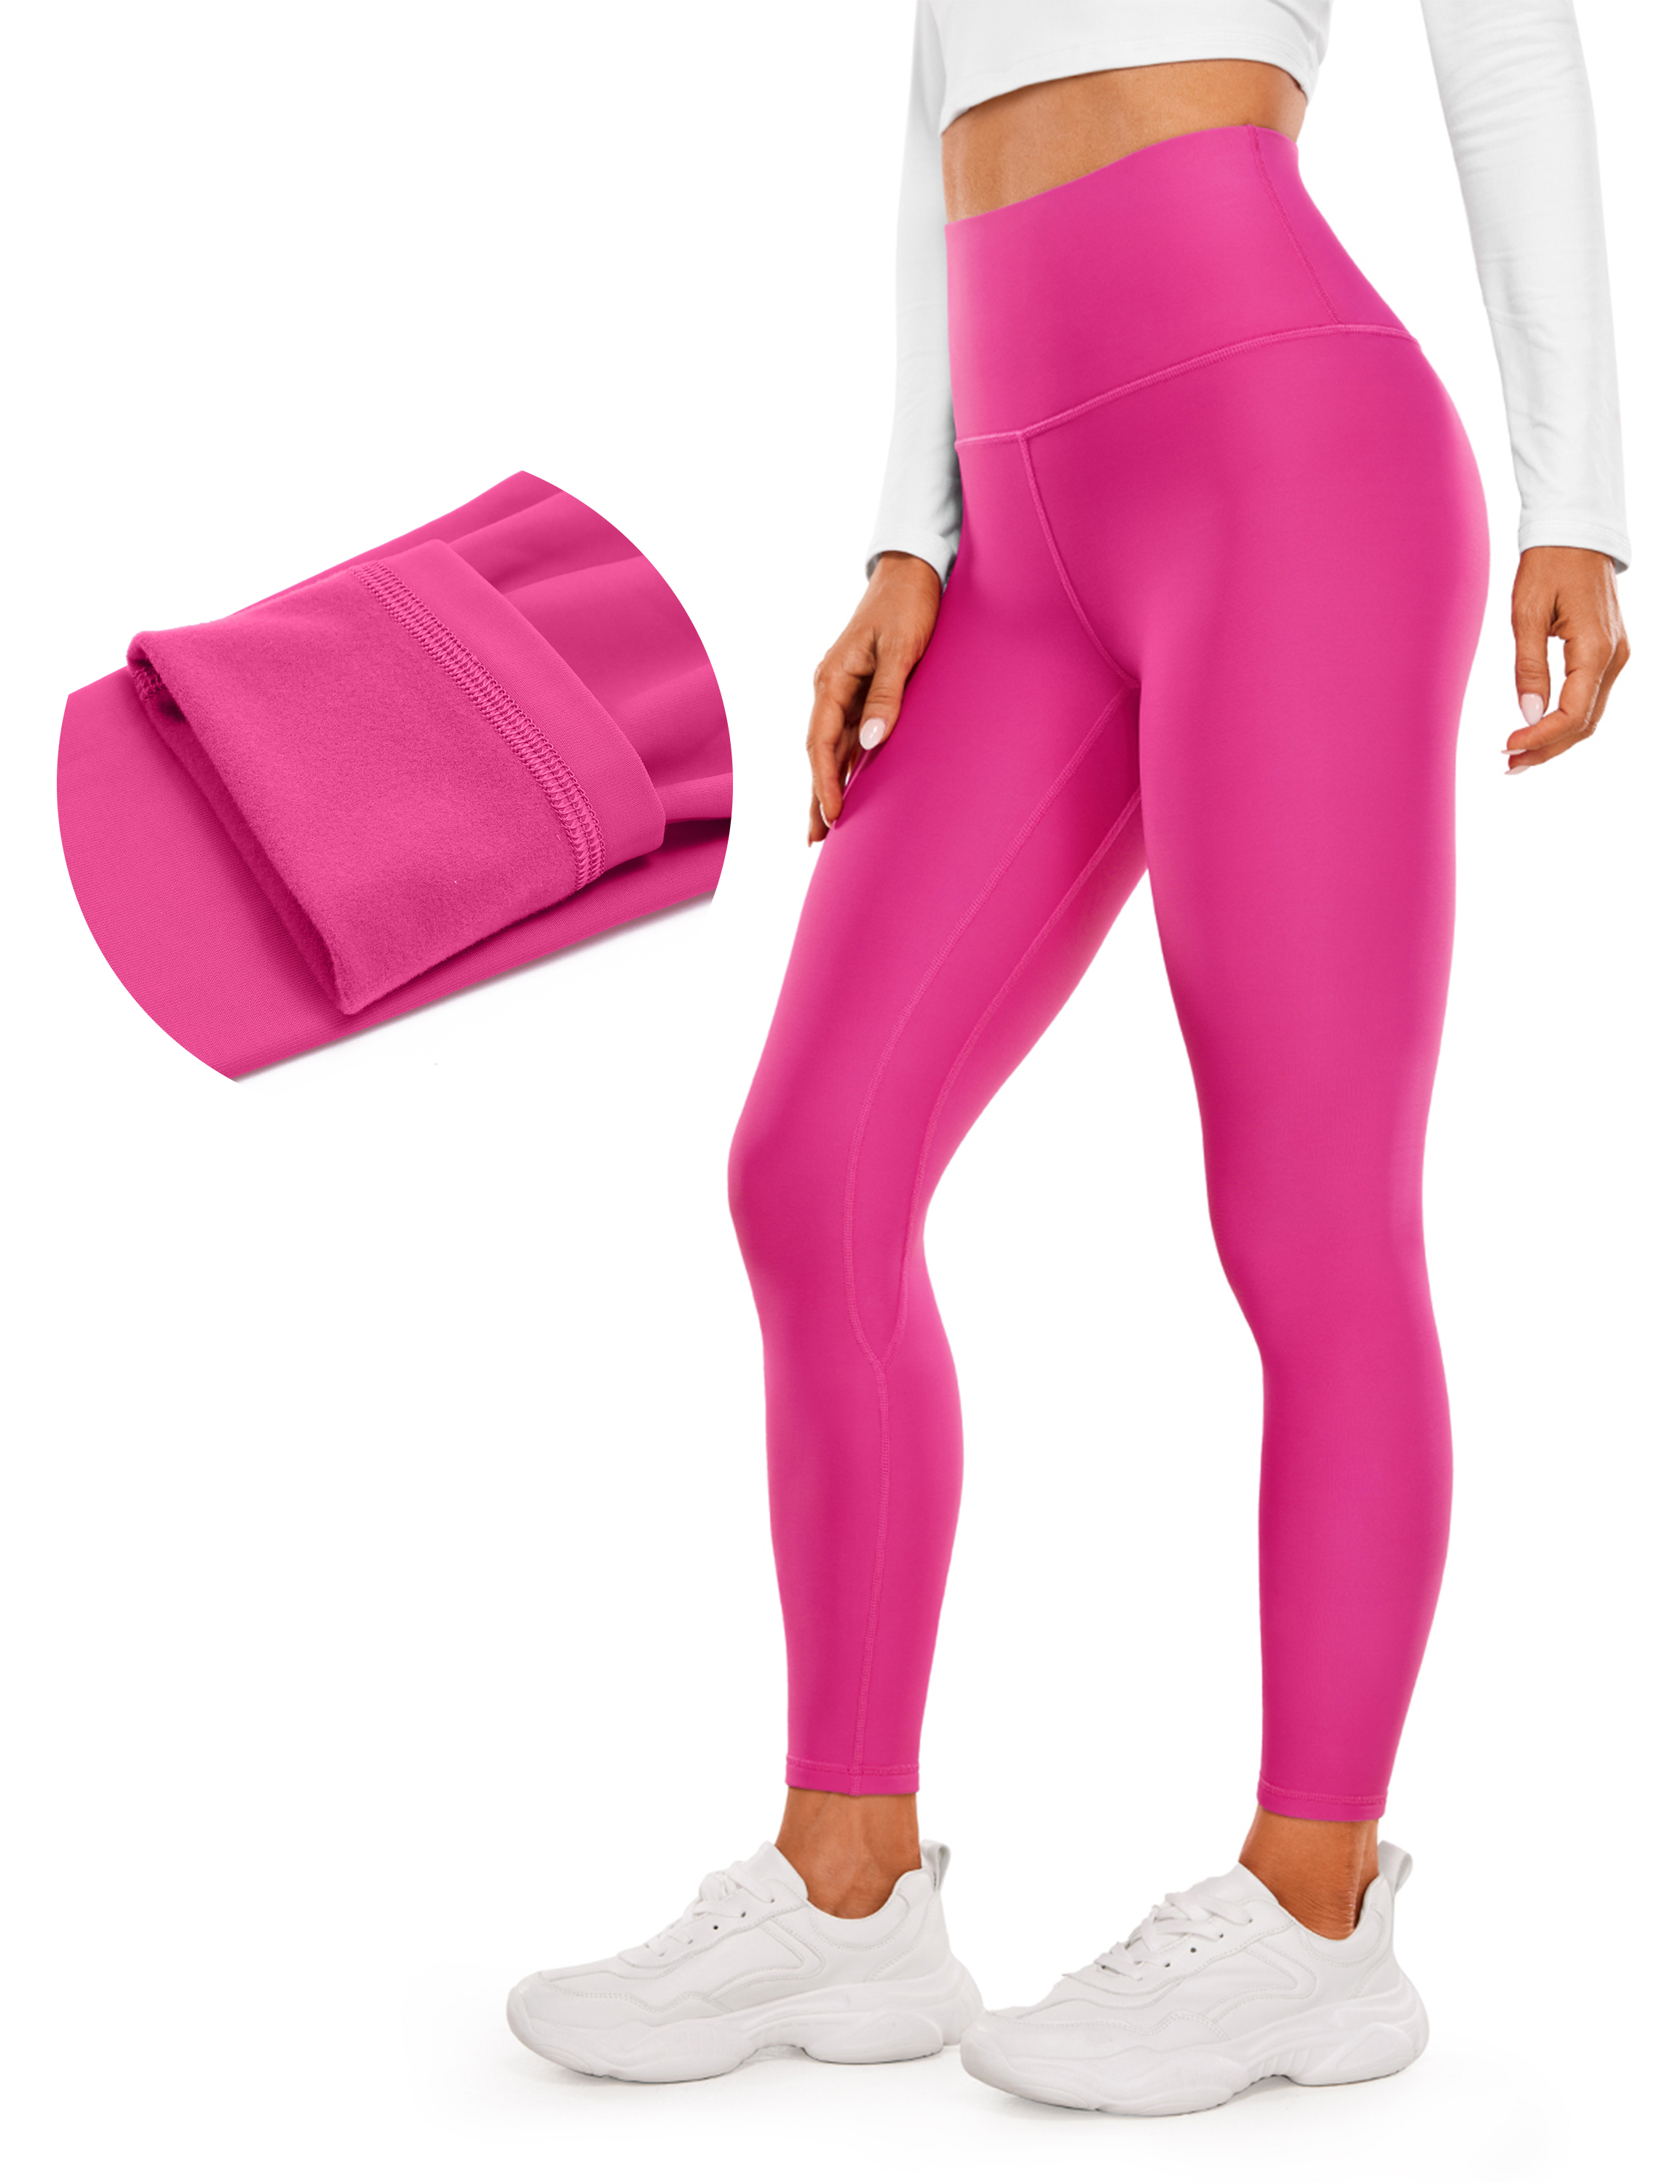 3/$25 CRZ Yoga High Waisted Capris Leggings  Hot pink leggings, Gymshark  fit leggings, Compression tights woman